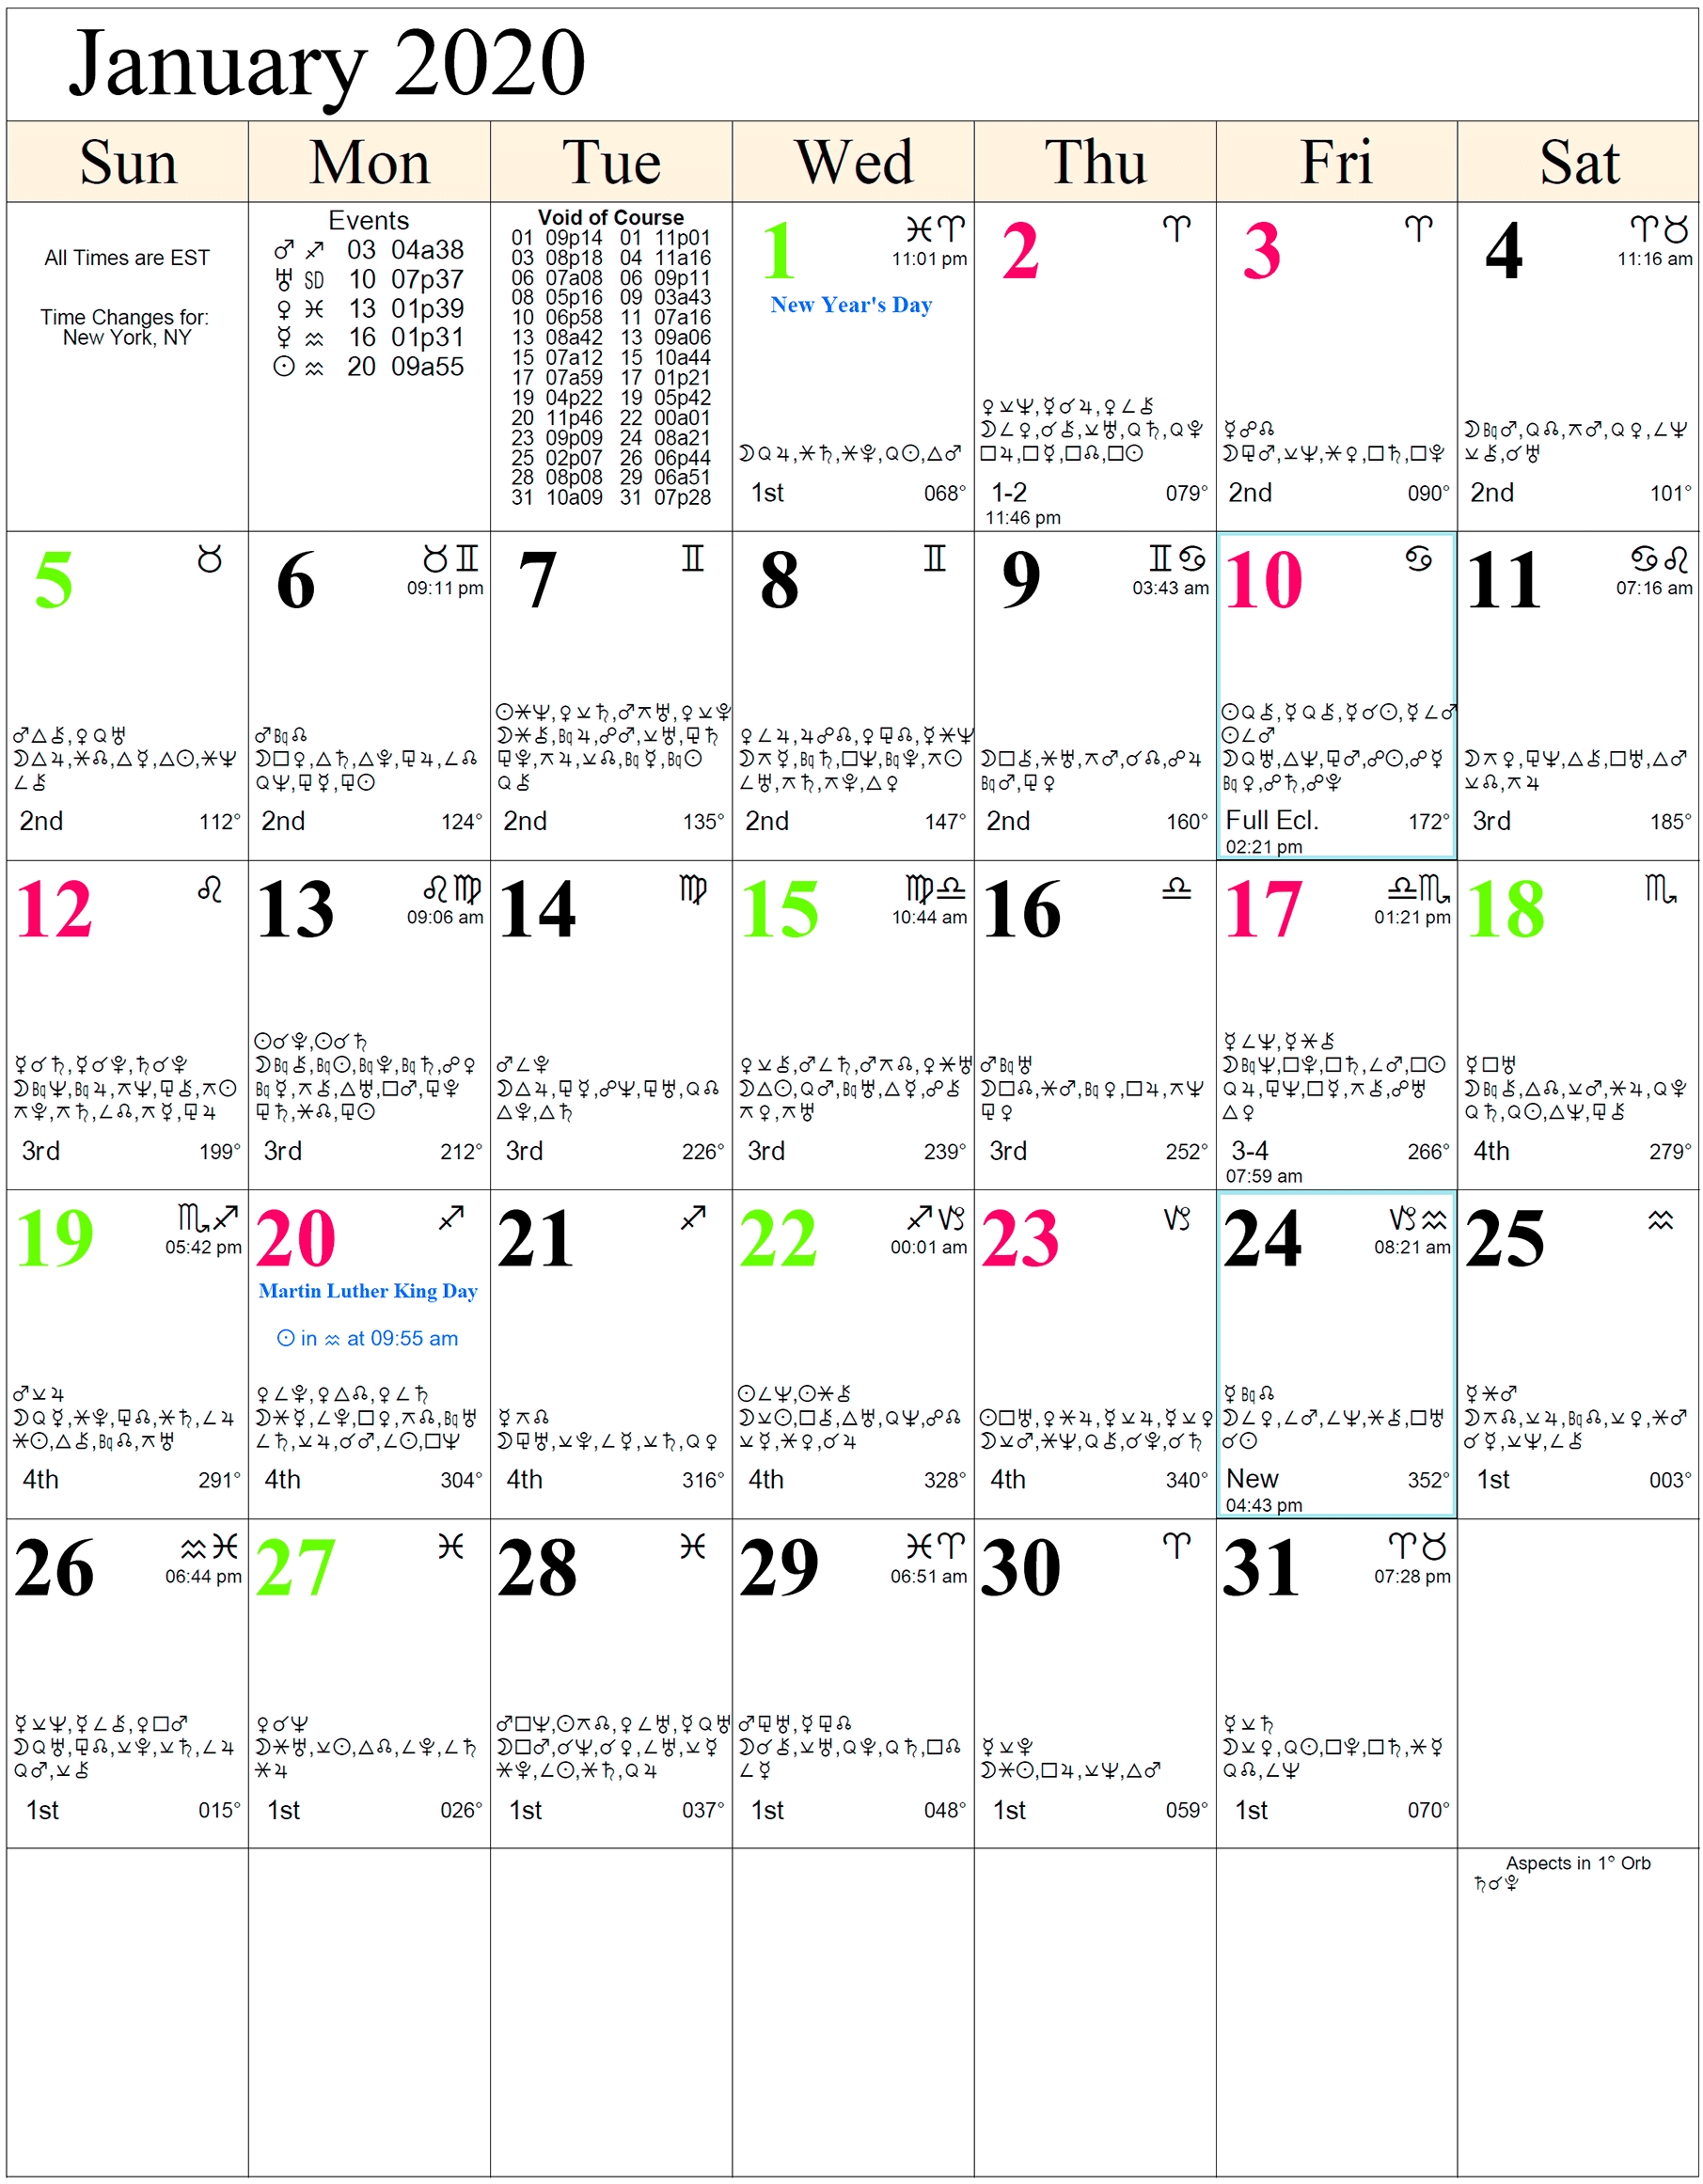 Monthly Astrology Calendars Mercury In Retrograde 2020 Calendar